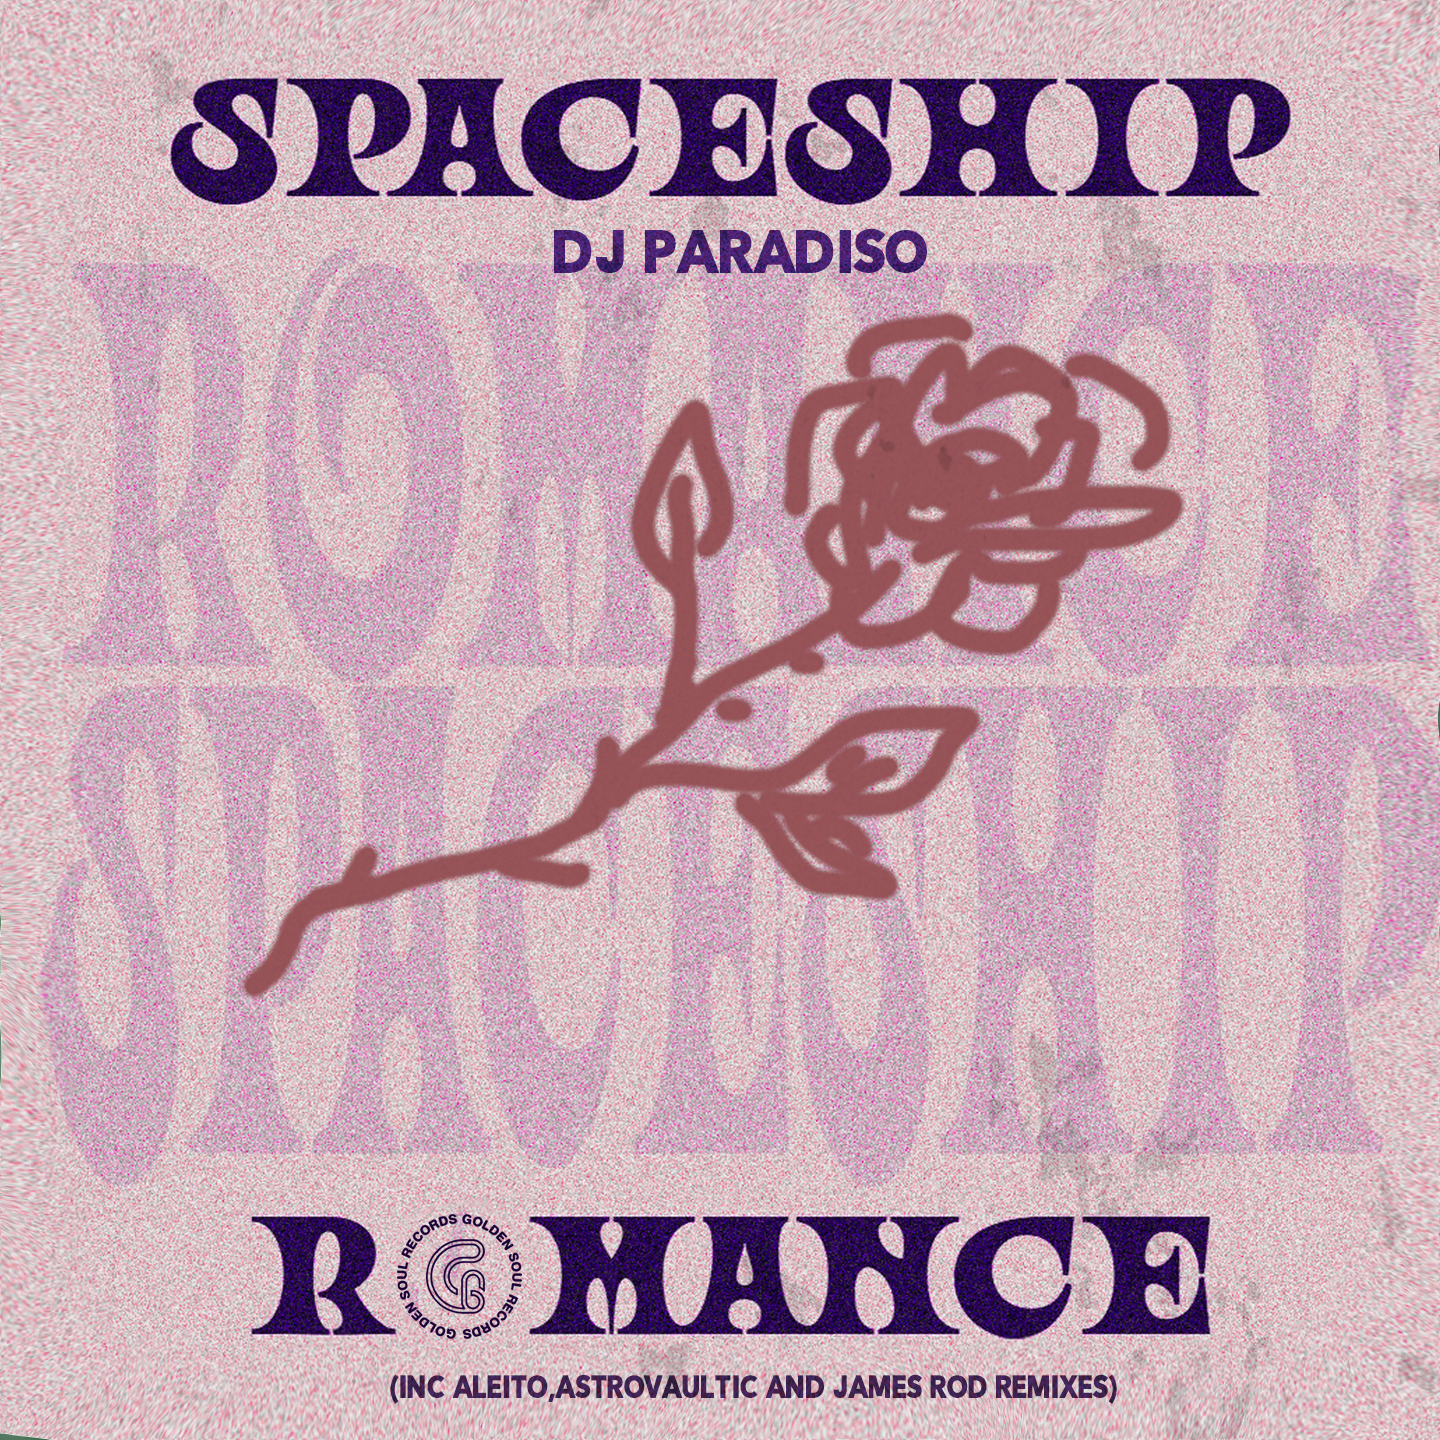 PREMIERE: Dj Paradiso - Spaceship Romance (Aleito Remix) [Golden Soul]